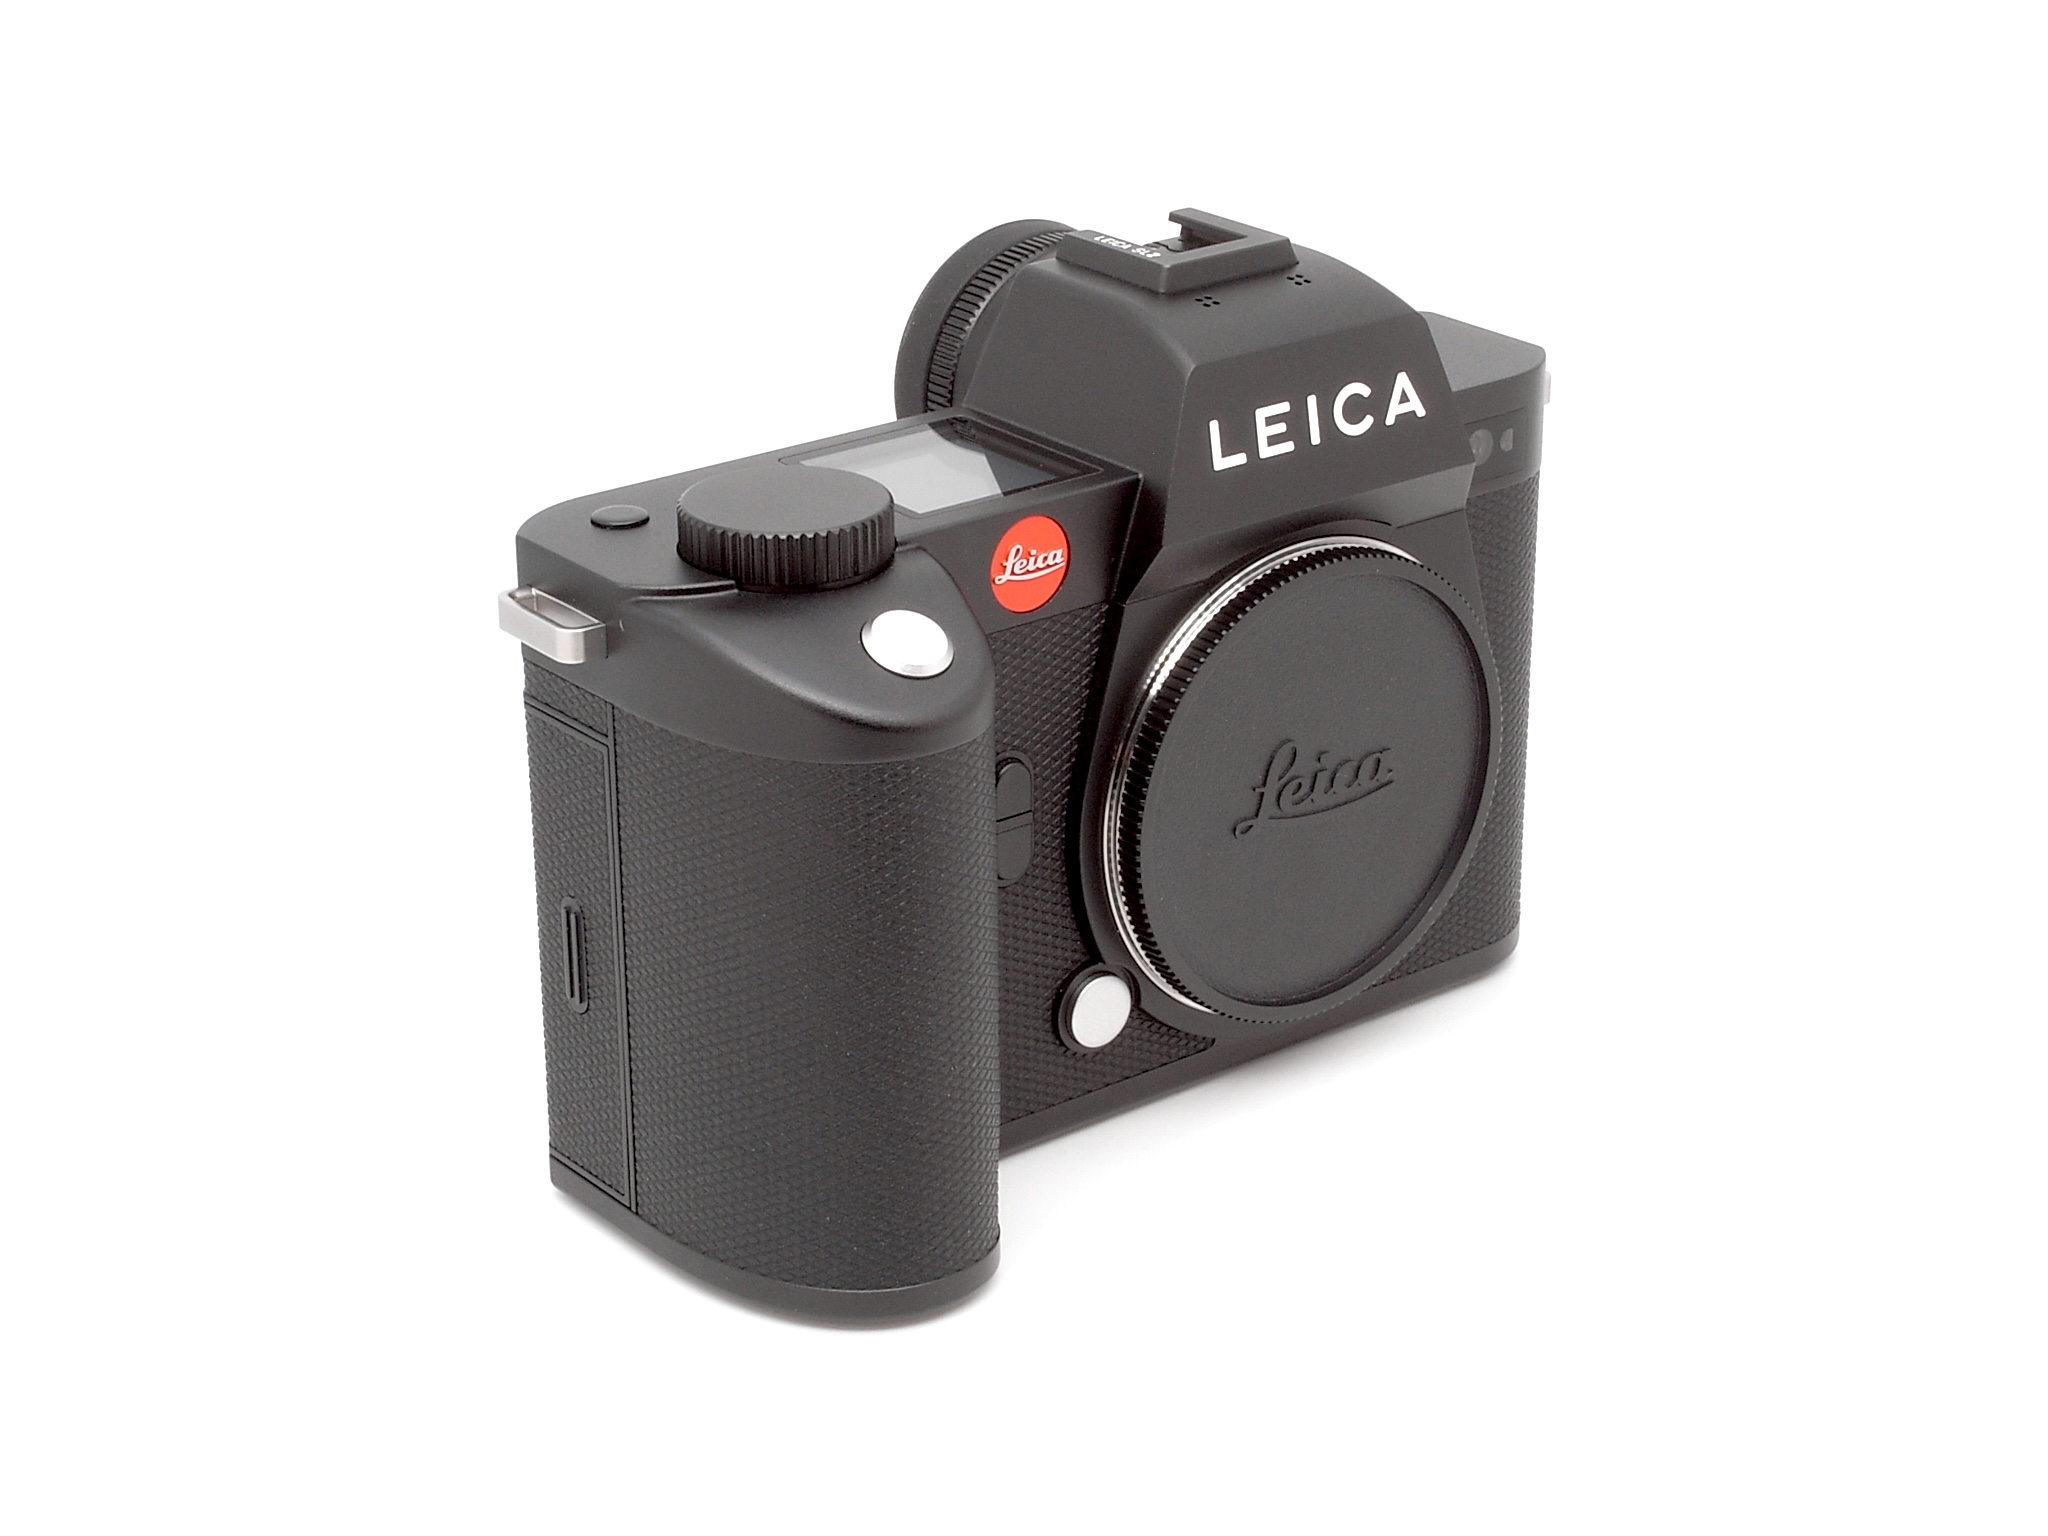 Leica SL2 black